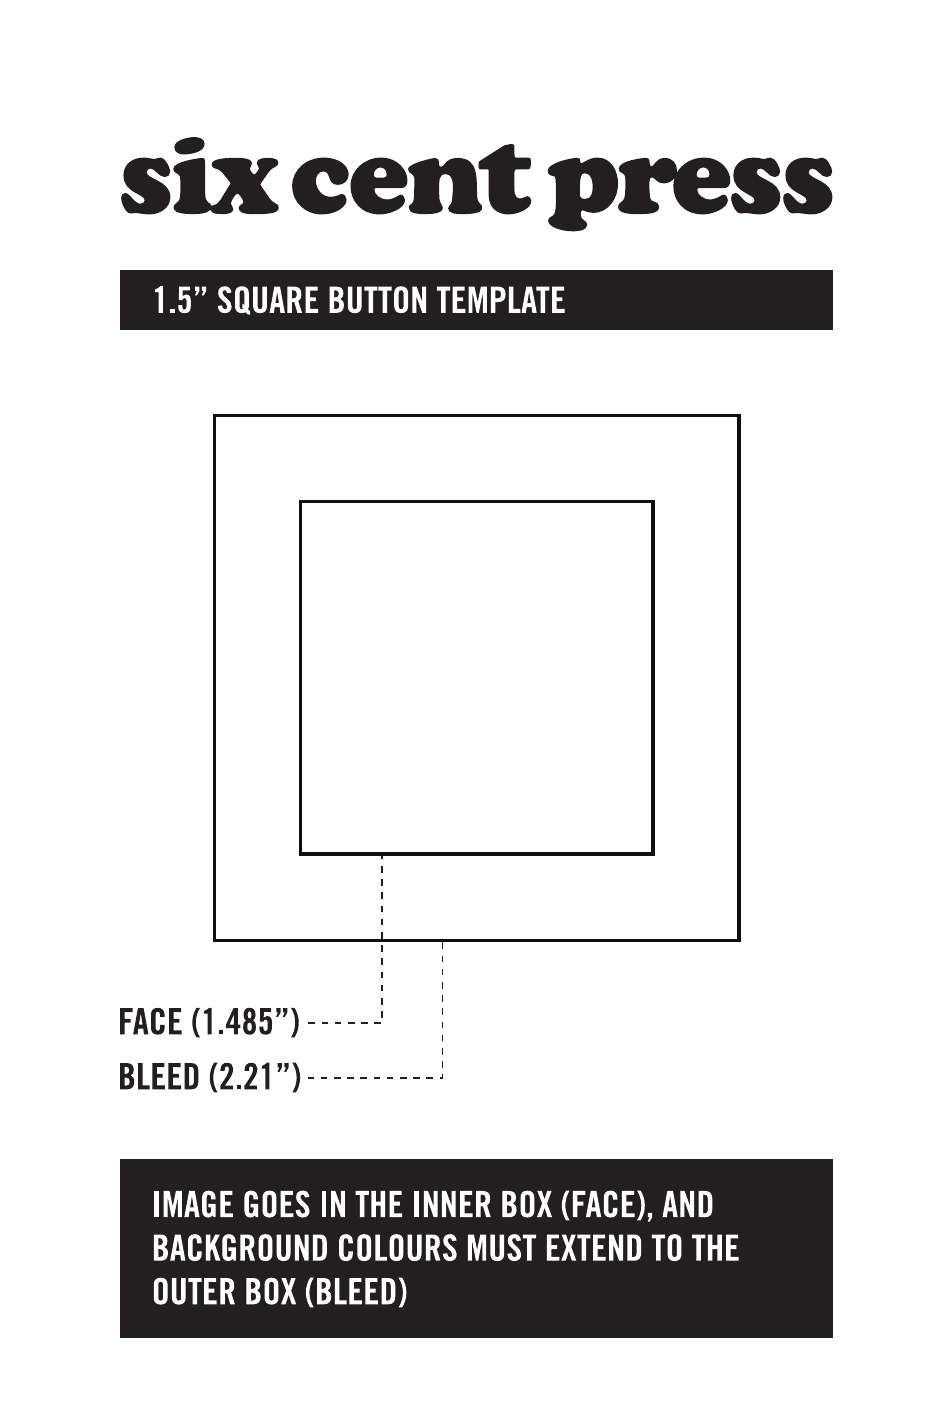 1.5 Square Button Template, Page 1